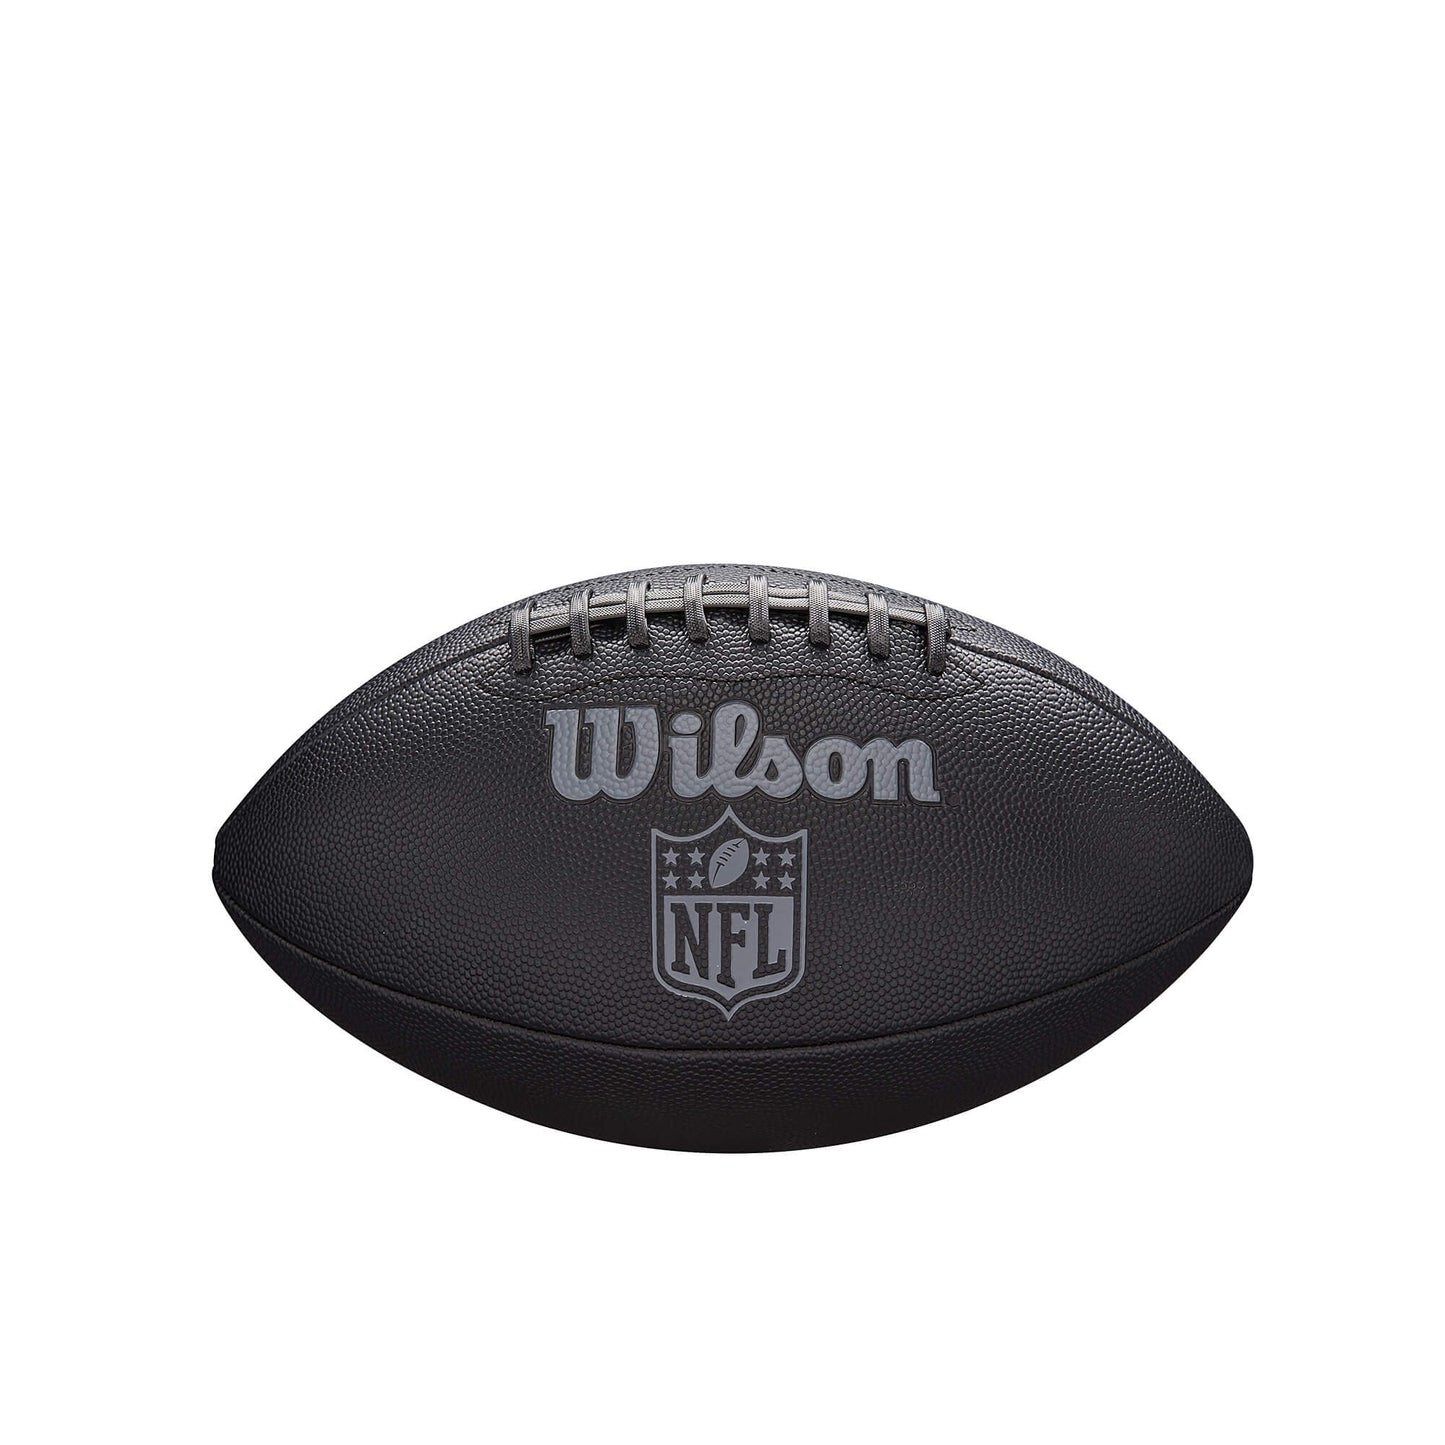 Wilson NFL Jet Black Junior Size Football Black